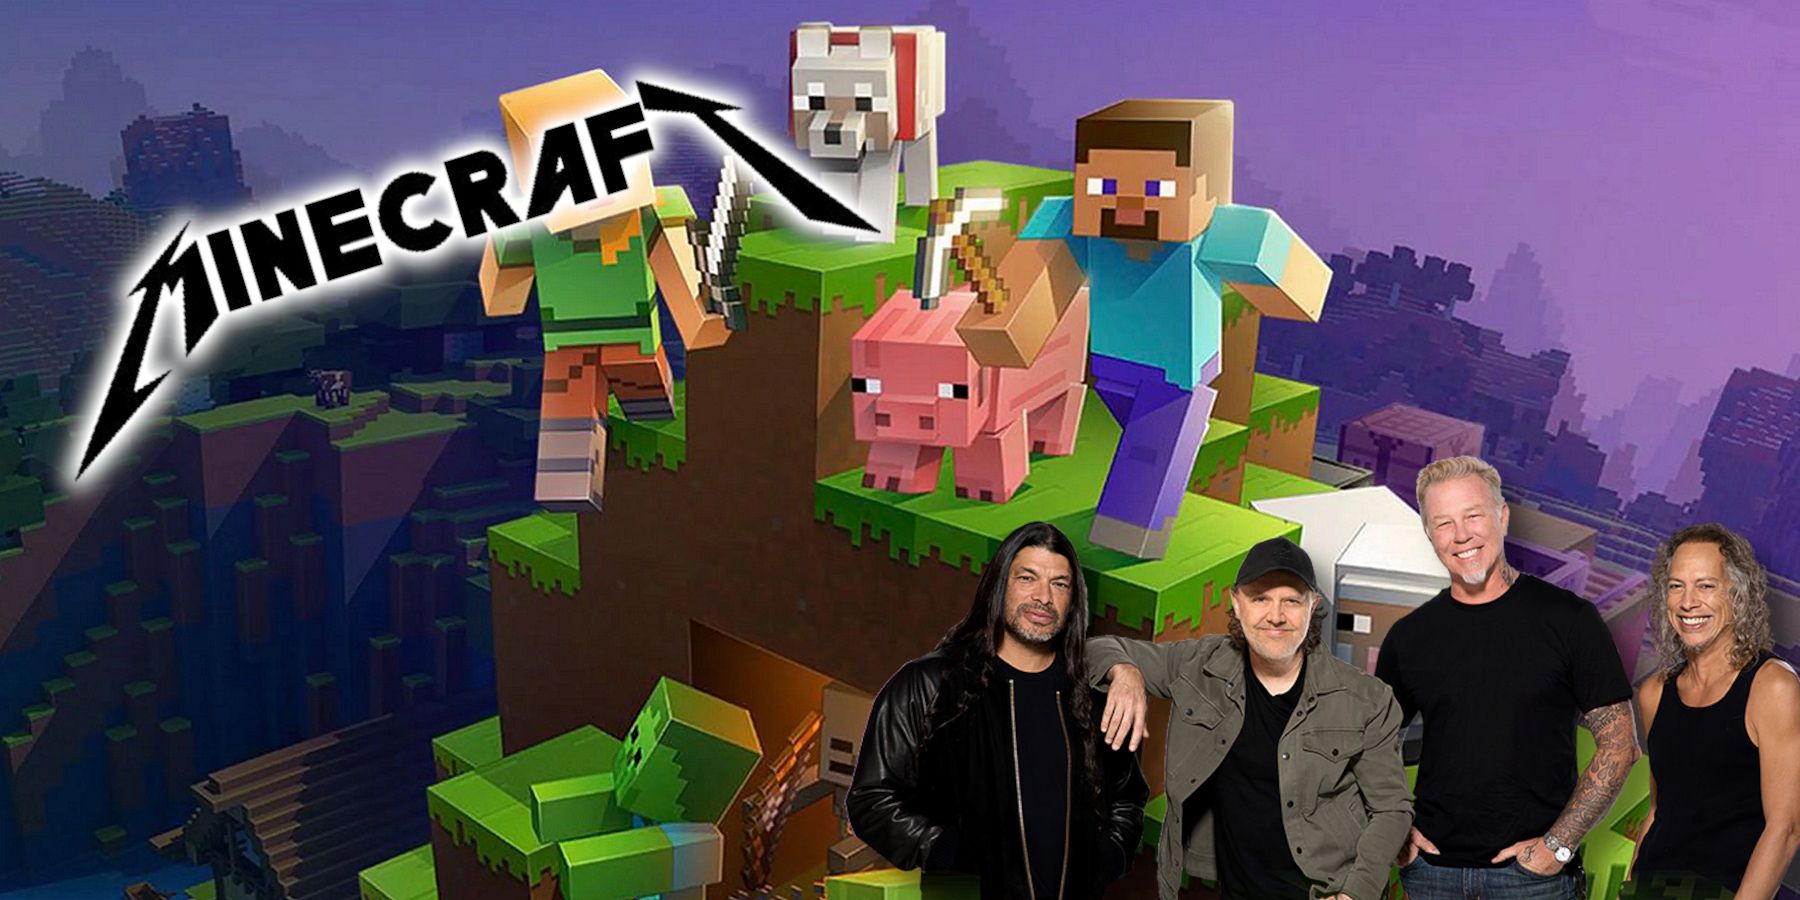 Minecraft Player Recreates Metallica's Master of Puppets
Album Cover